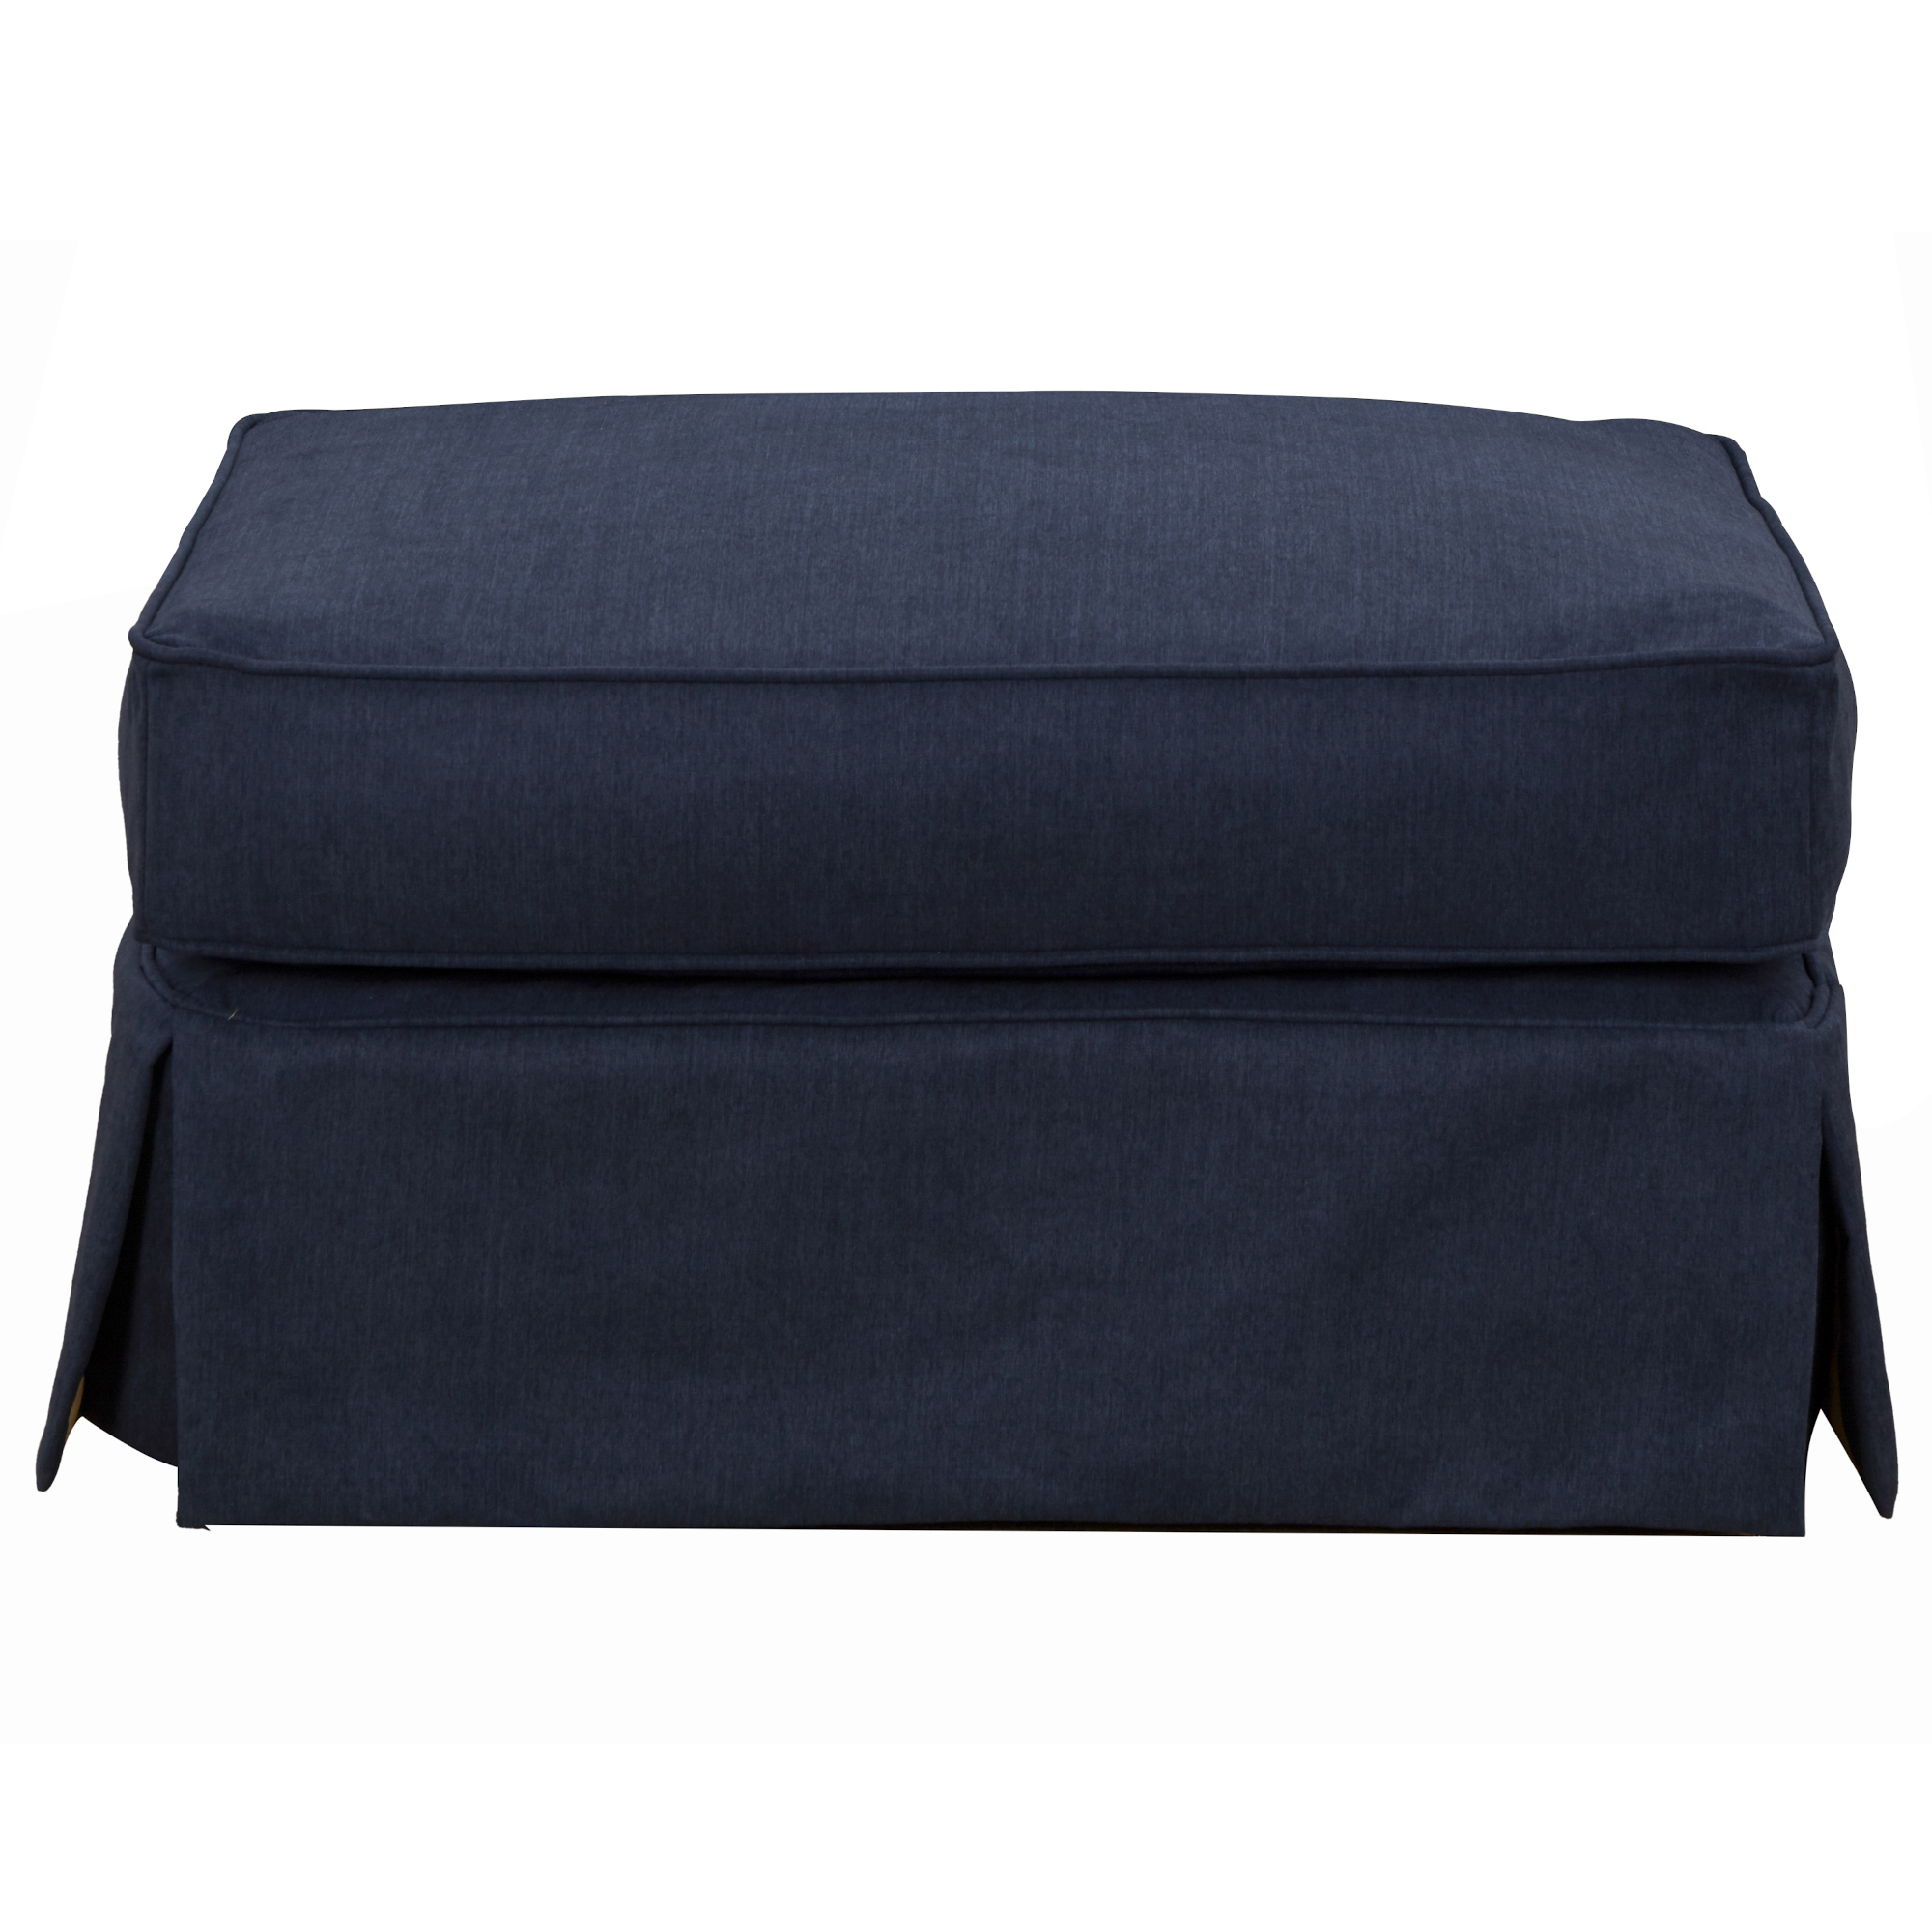 Horizon Upholstered Pillow Top Ottoman - Navy Blue